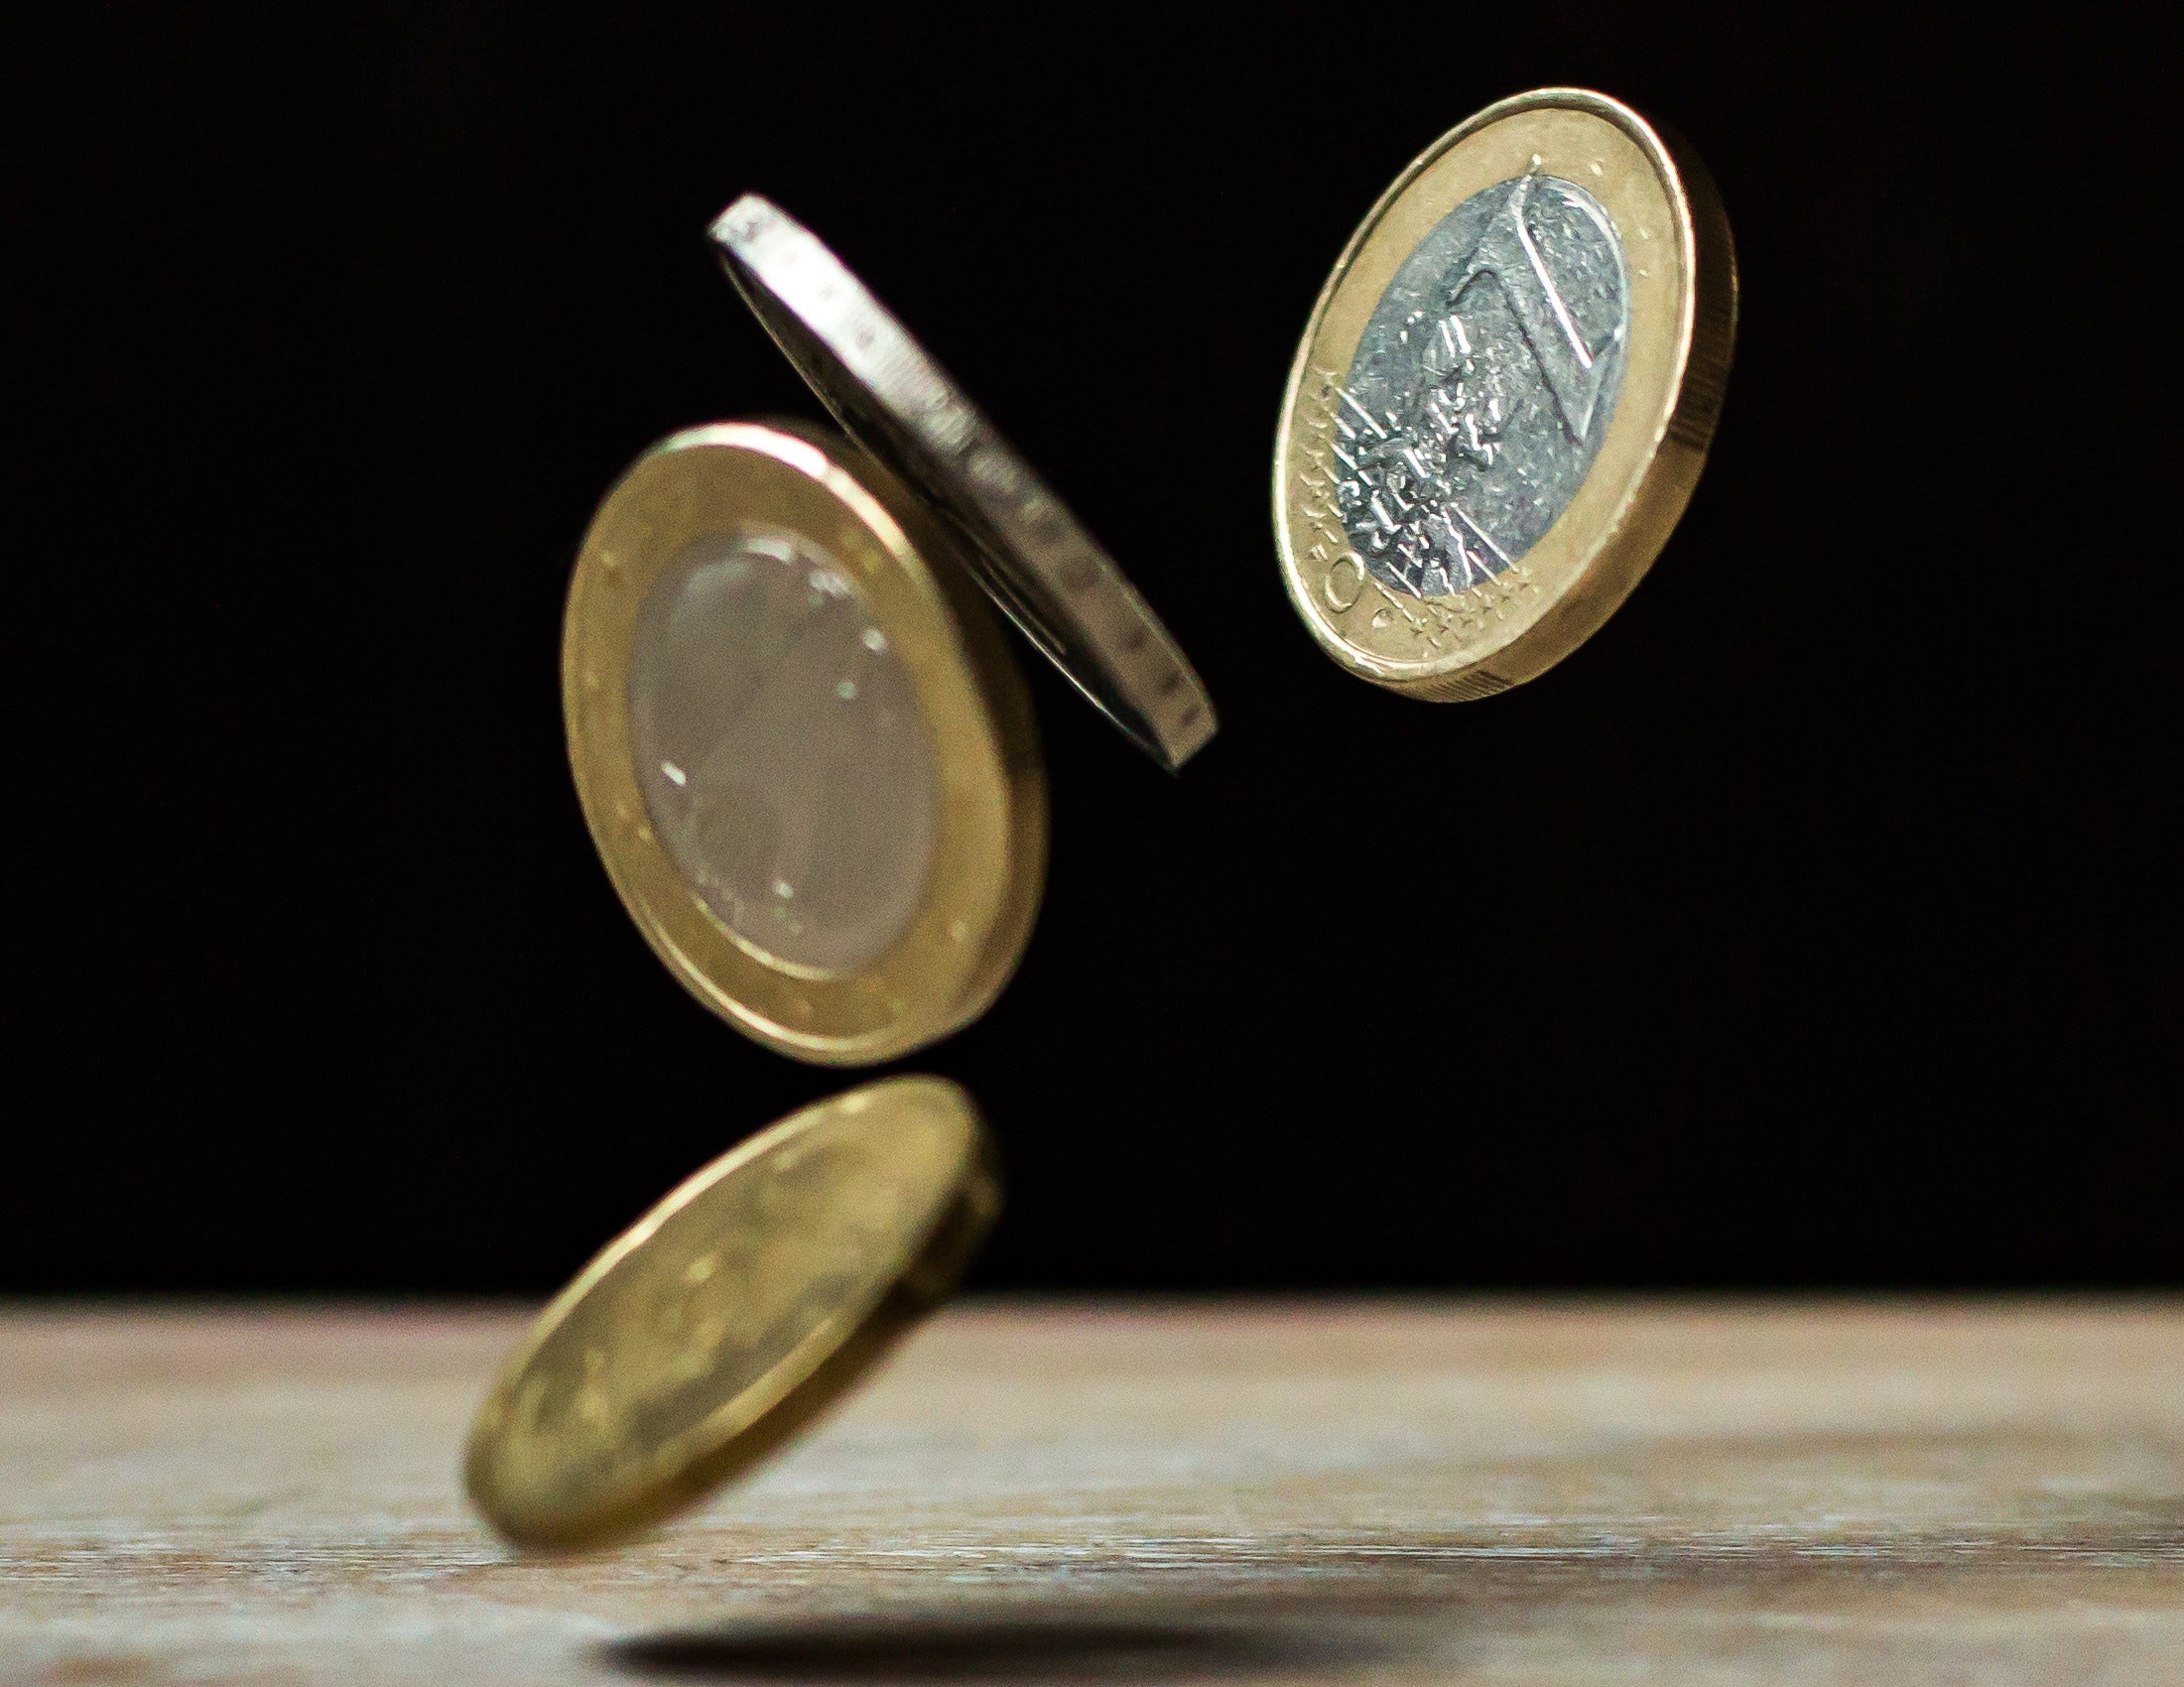 Euro coins bouncing off a table